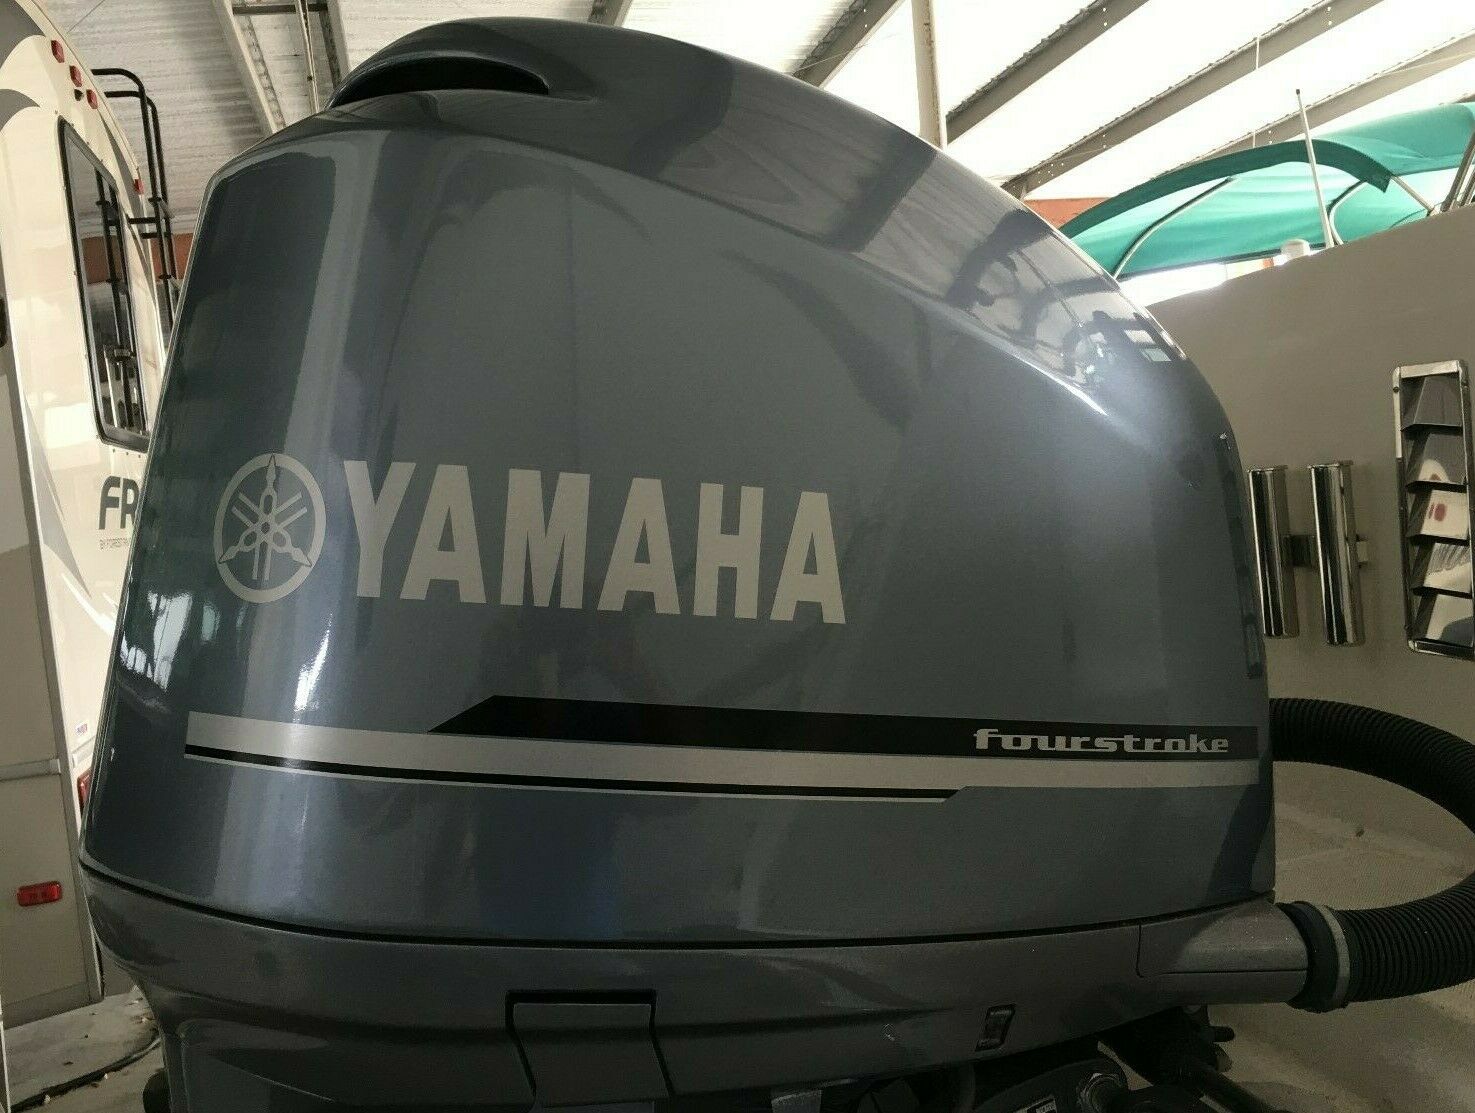 Yamaha  V6 Outboard Decal Sticker Kit 200 / 225 / 250 / 300 Hp  Marine Vinyl